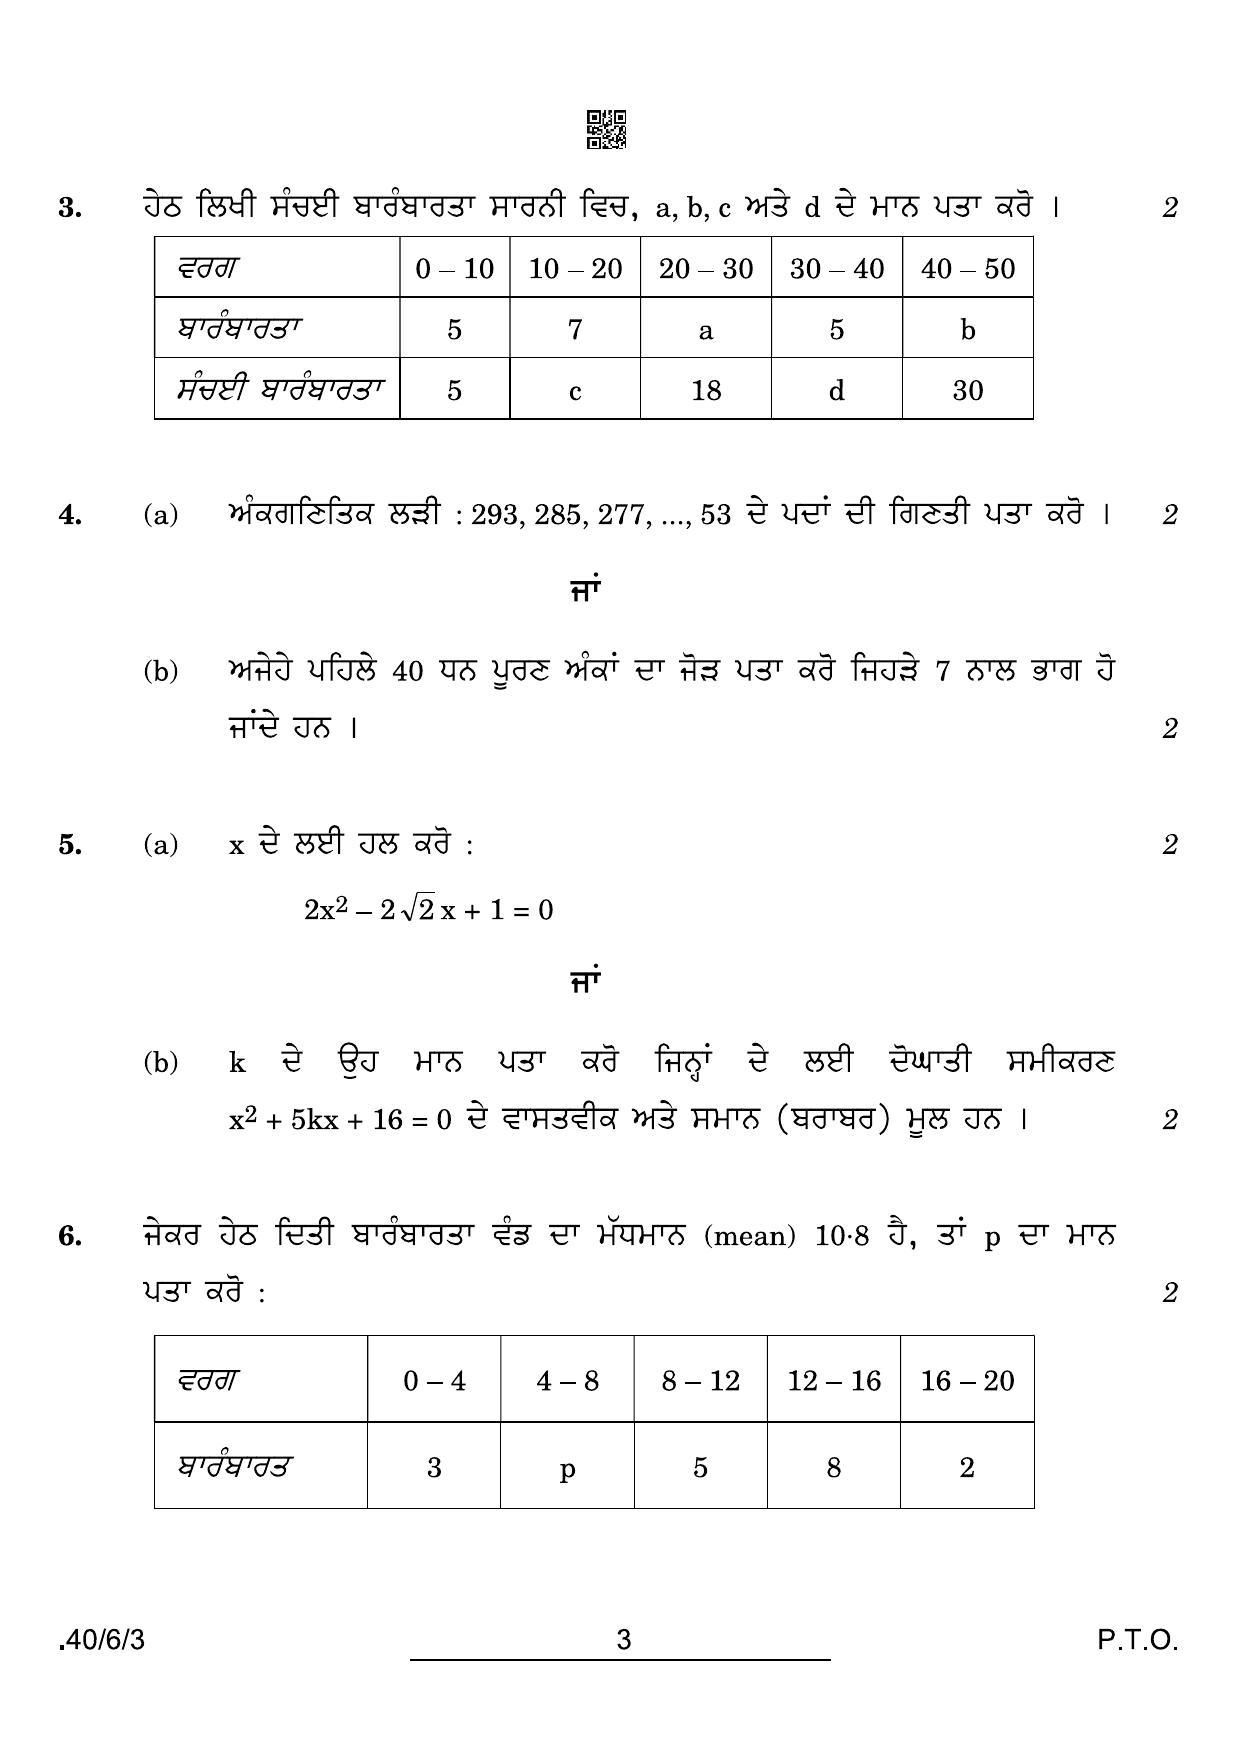 CBSE Class 10 40-6-3 Maths Std Punjabi 2022 Compartment Question Paper - Page 3